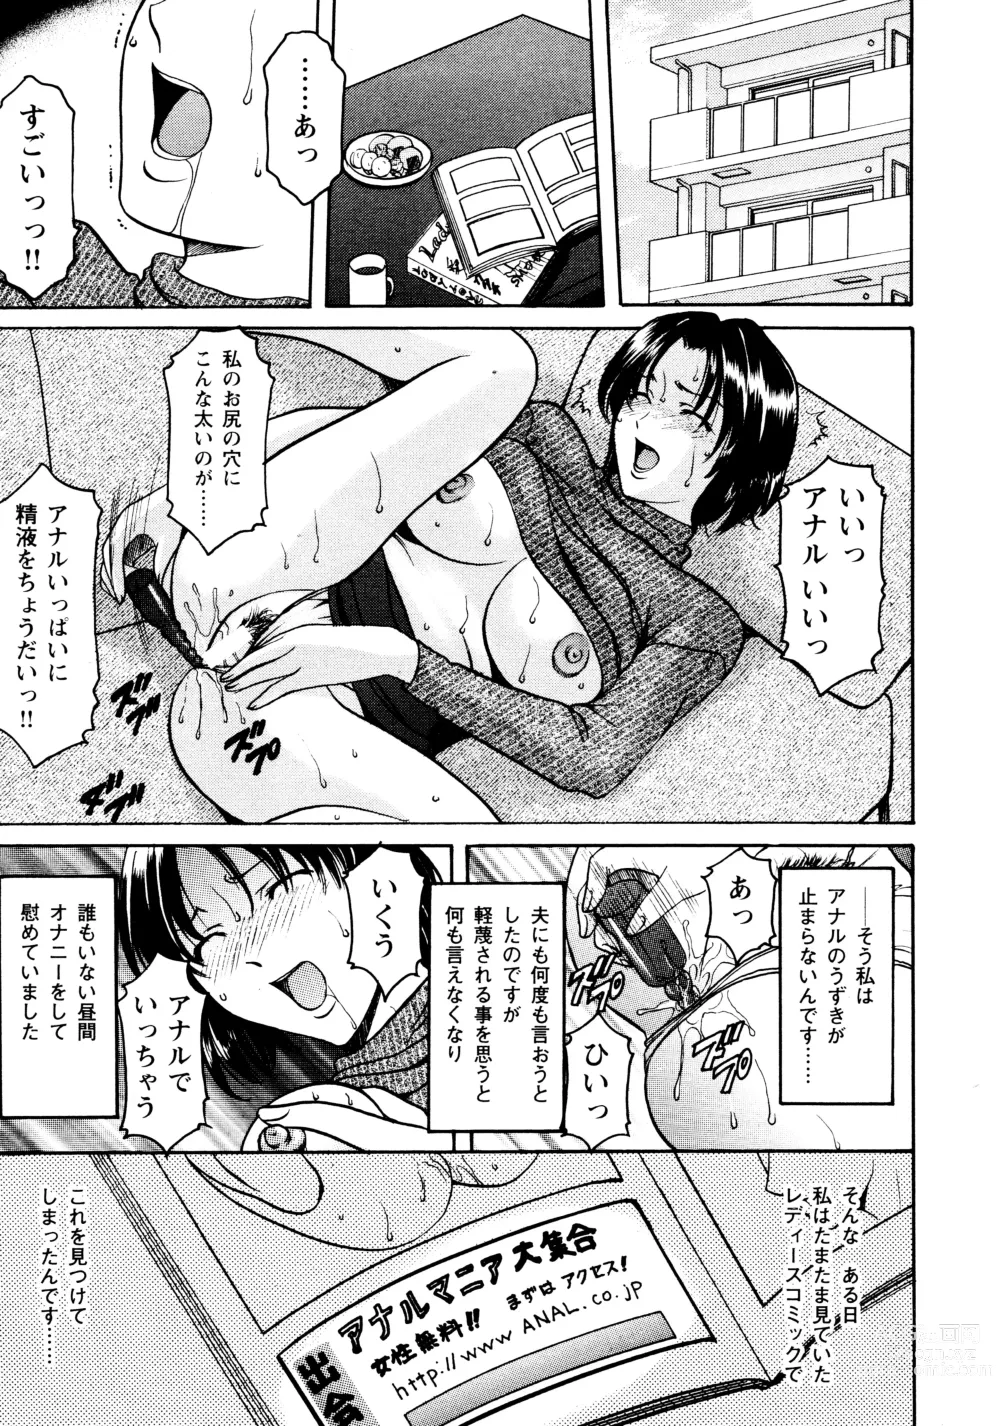 Page 9 of doujinshi Mi Comic-ka Sakuhinshou 2